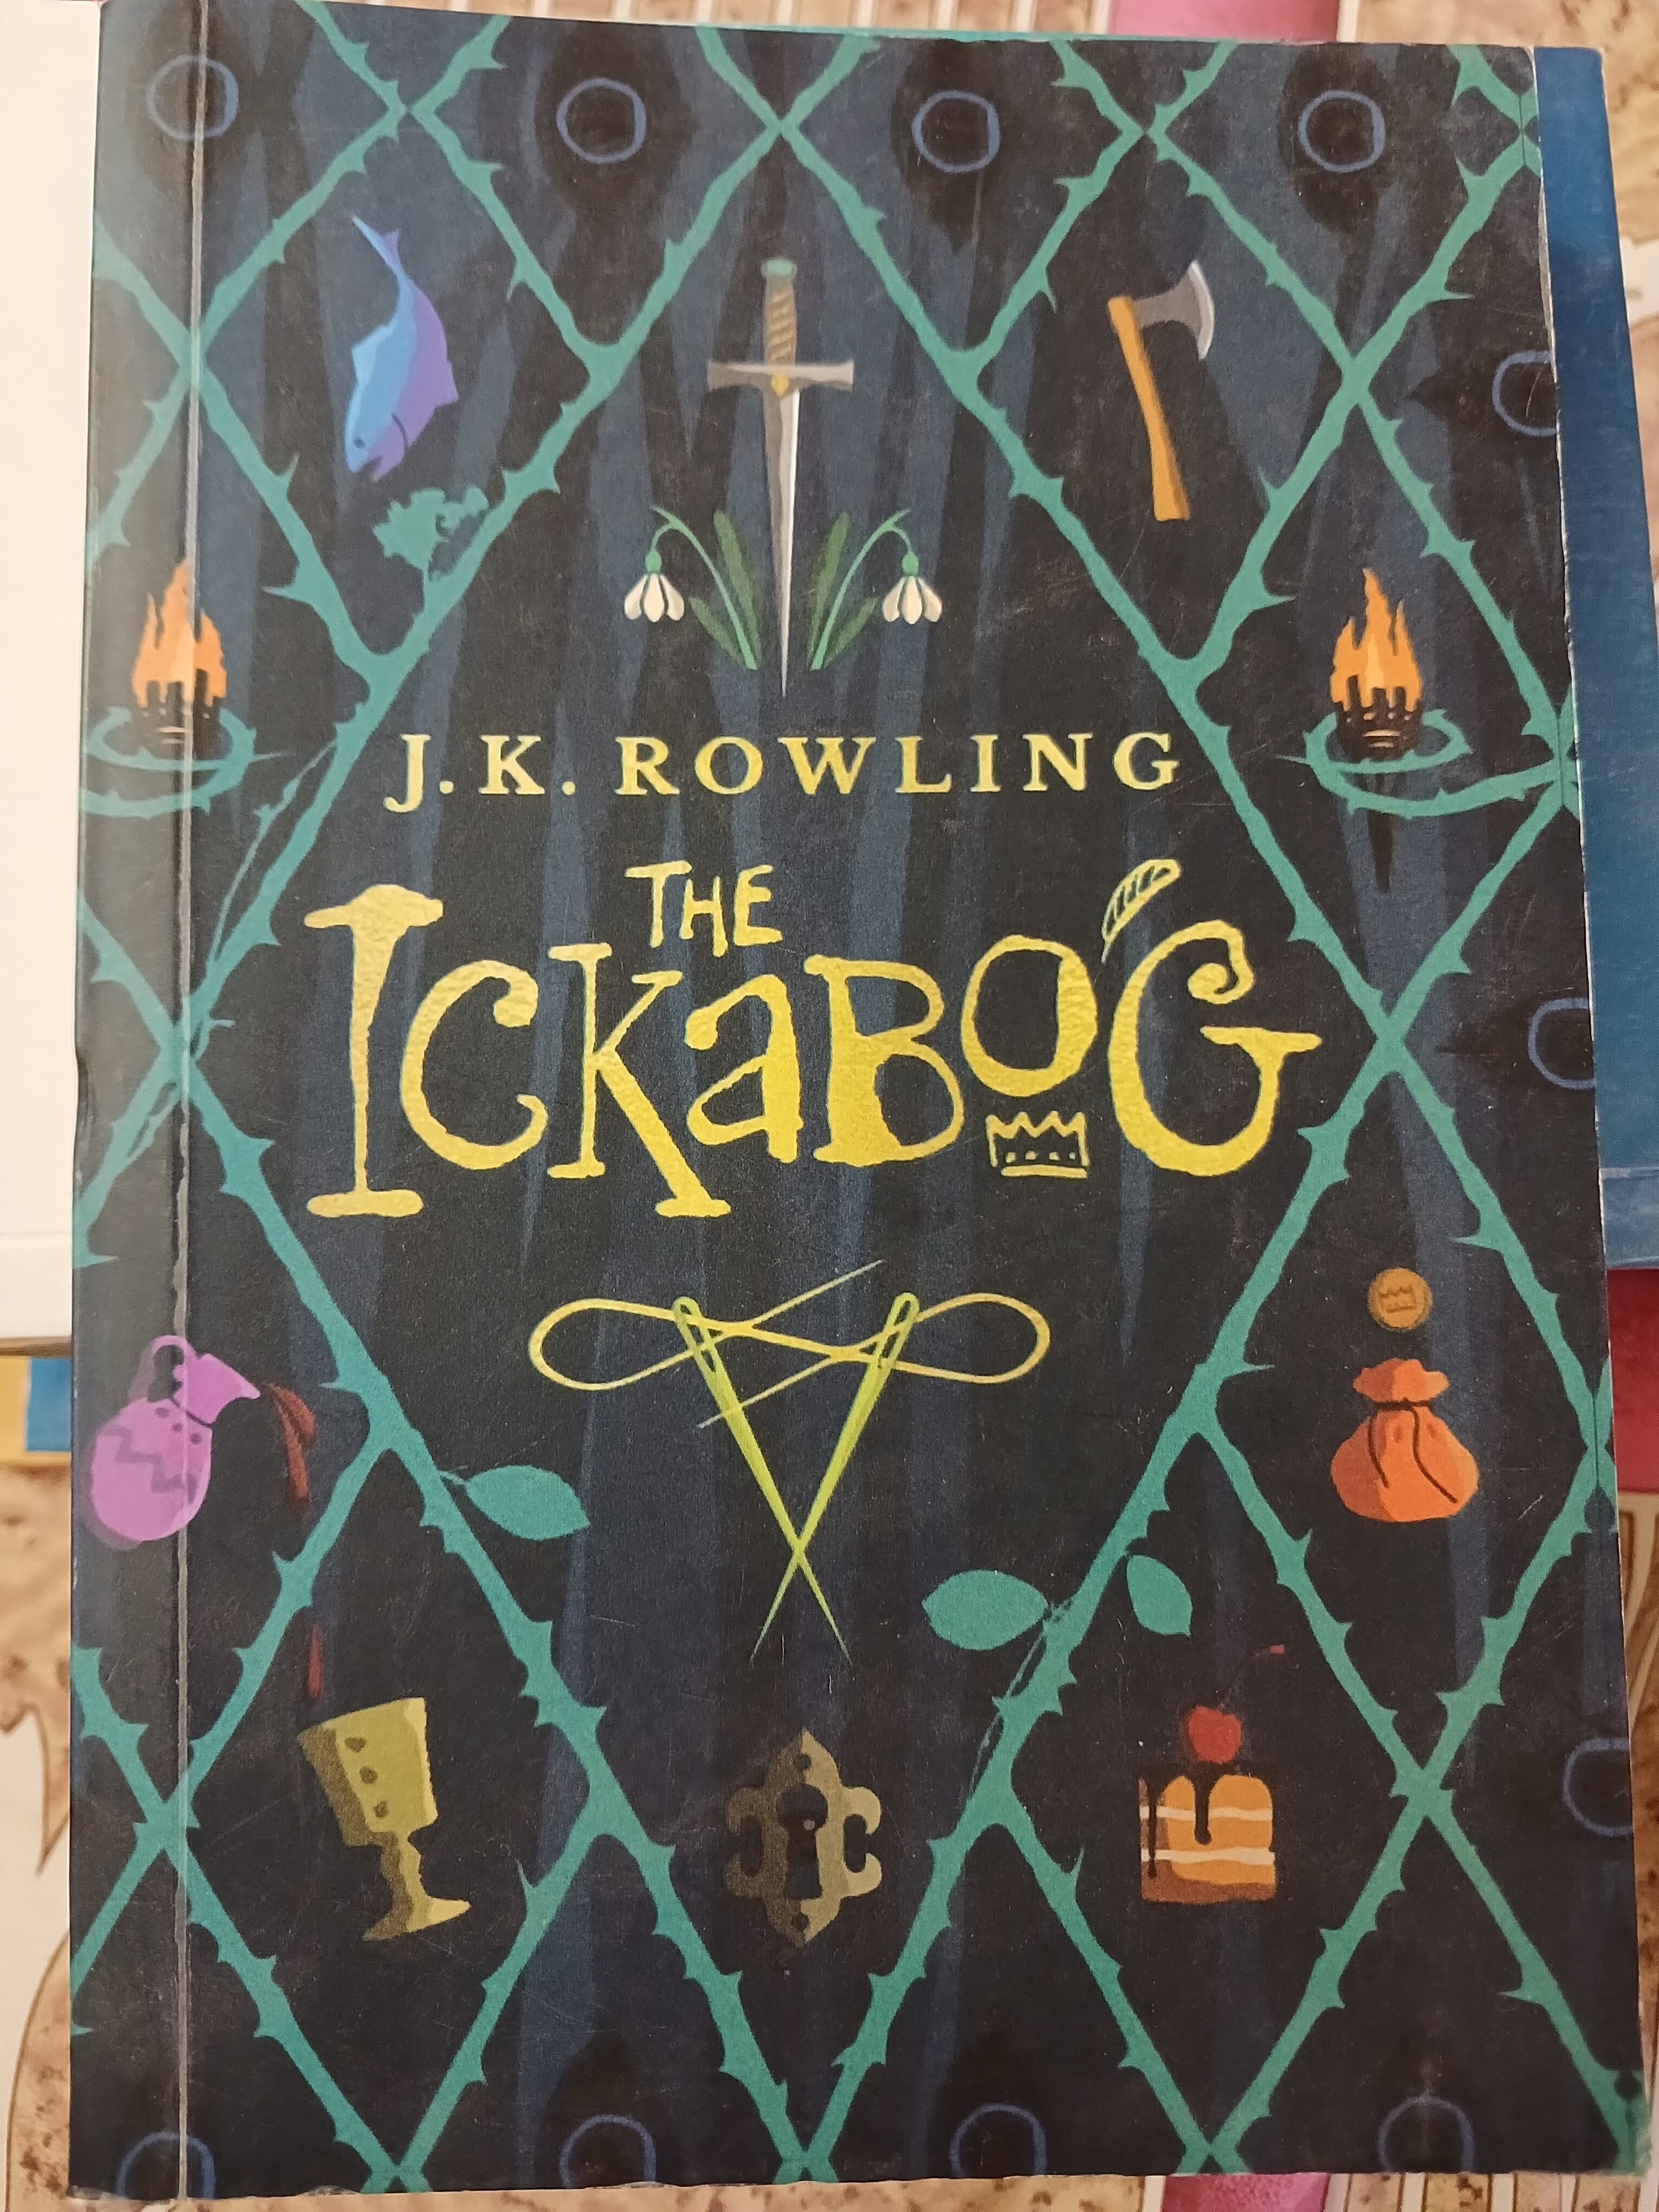 The IckaBoG by J.k. Rowling